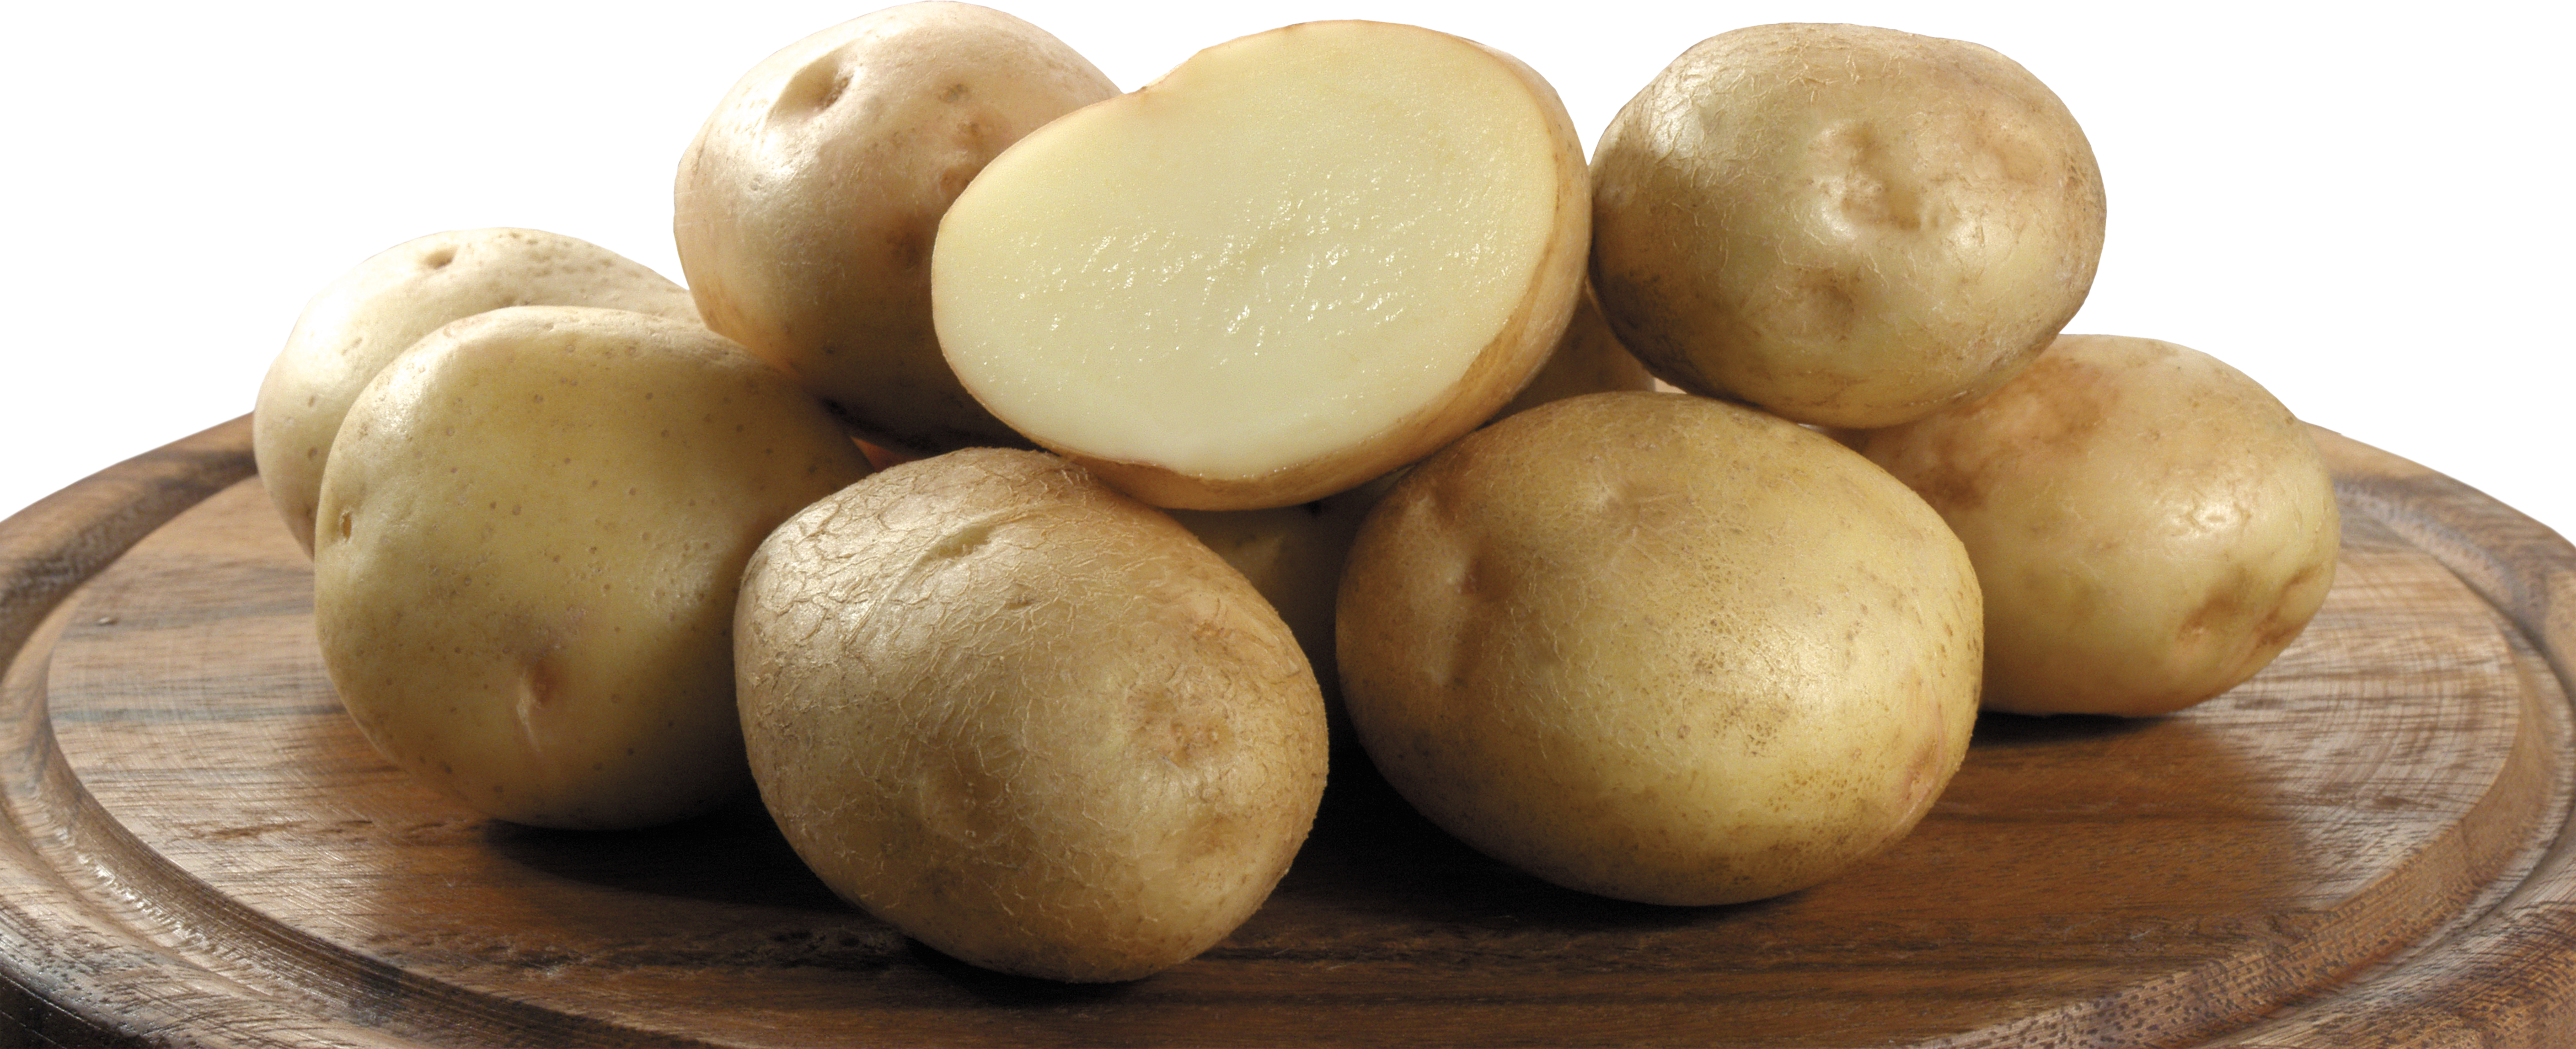 Batatas no prato